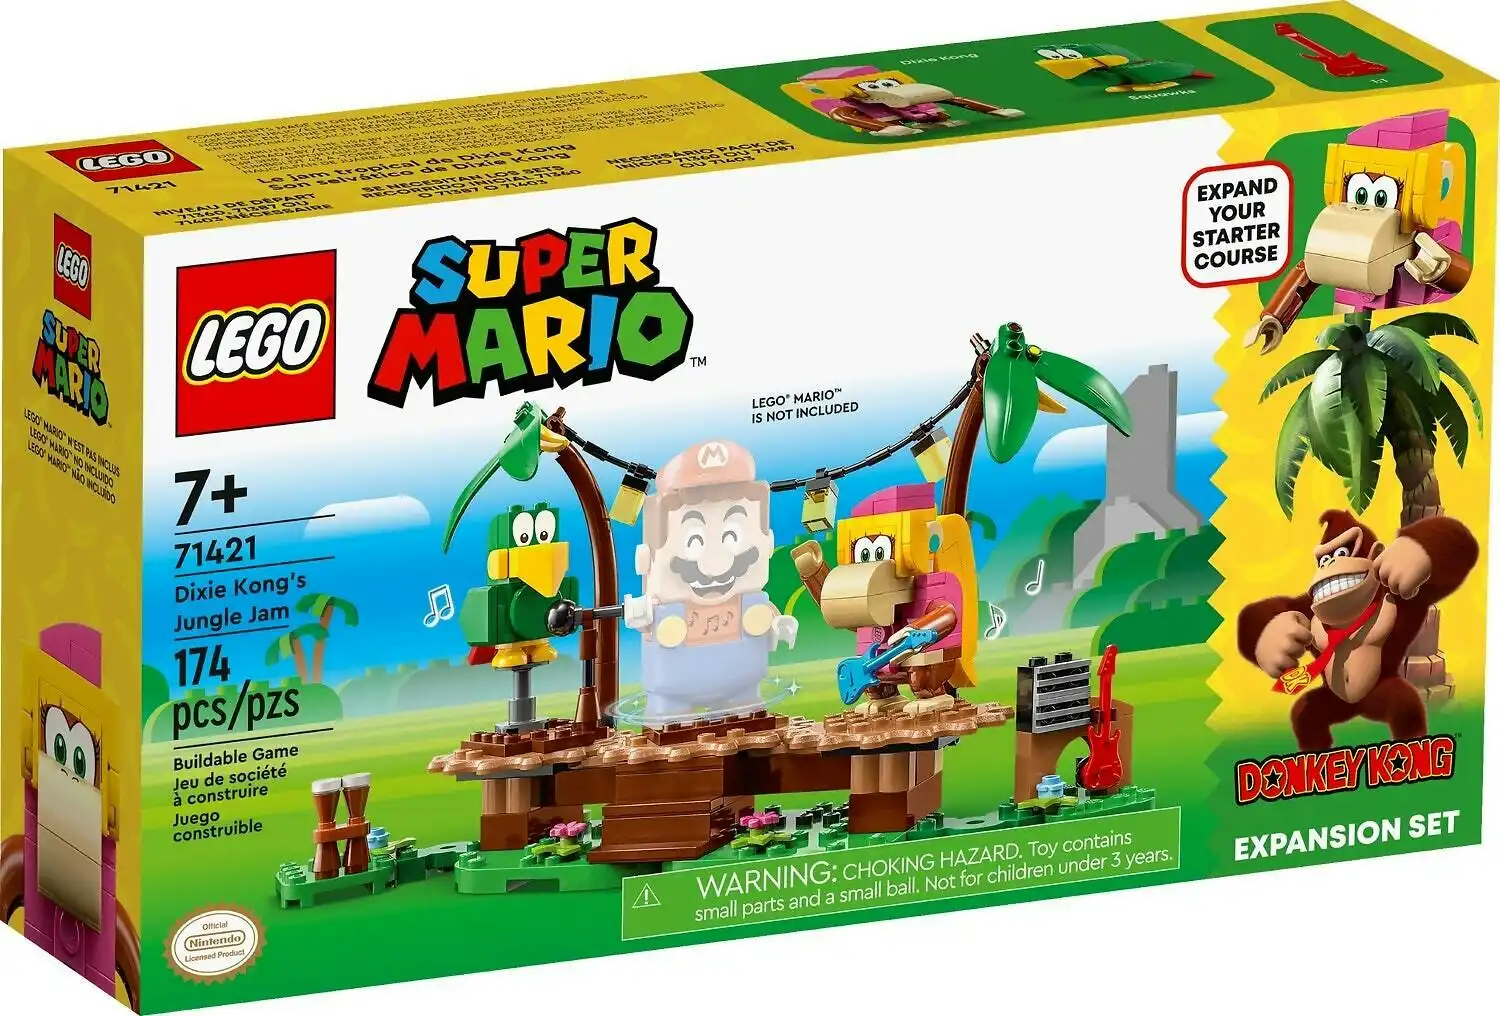 LEGO 71421 Dixie Kong's Jungle Jam Expansion Set - Super Mario